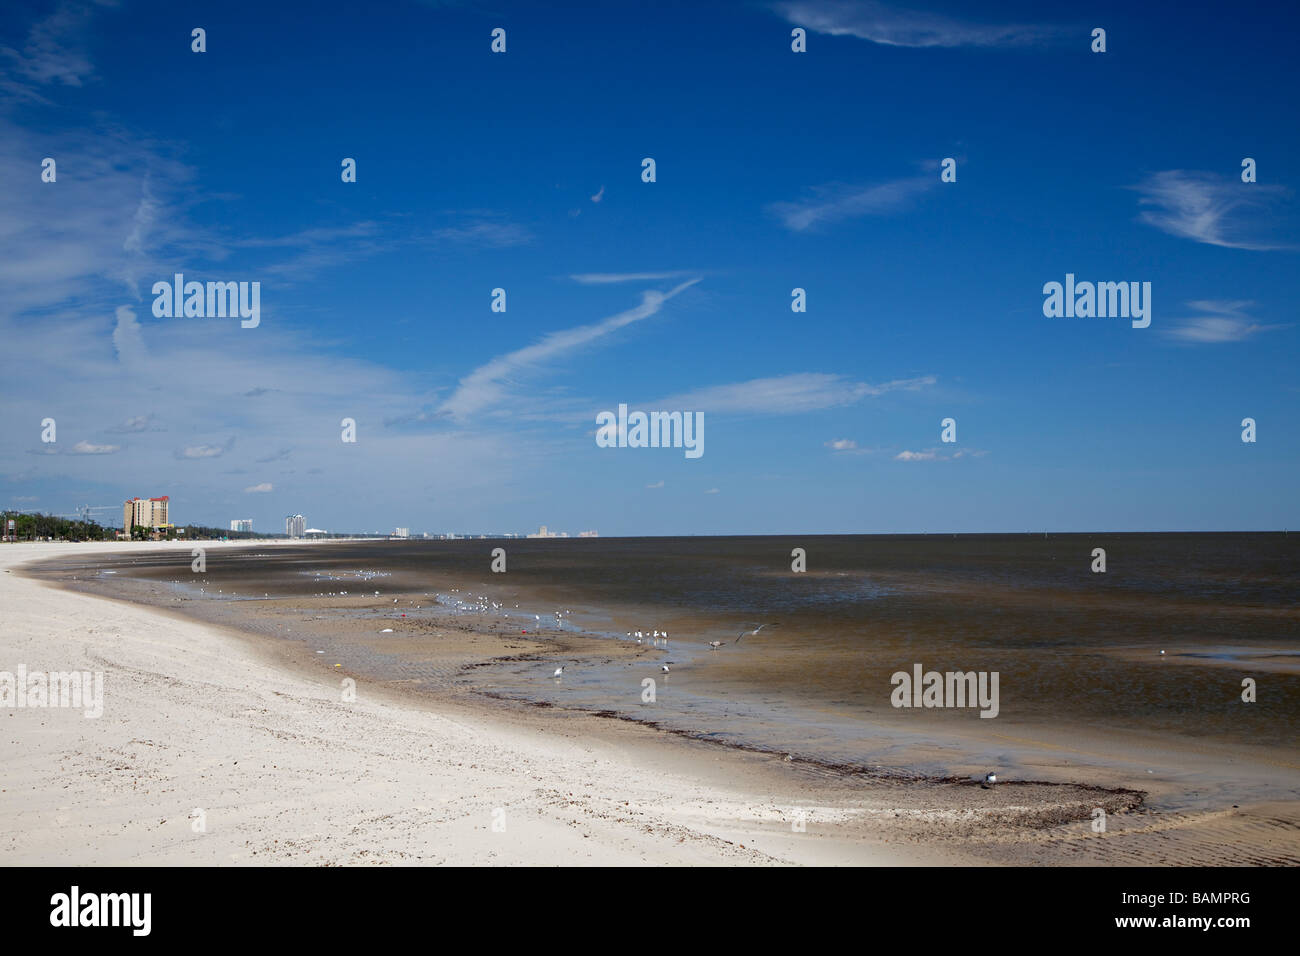 Golf von Mexiko Strand in Biloxi, Mississippi Stockfoto